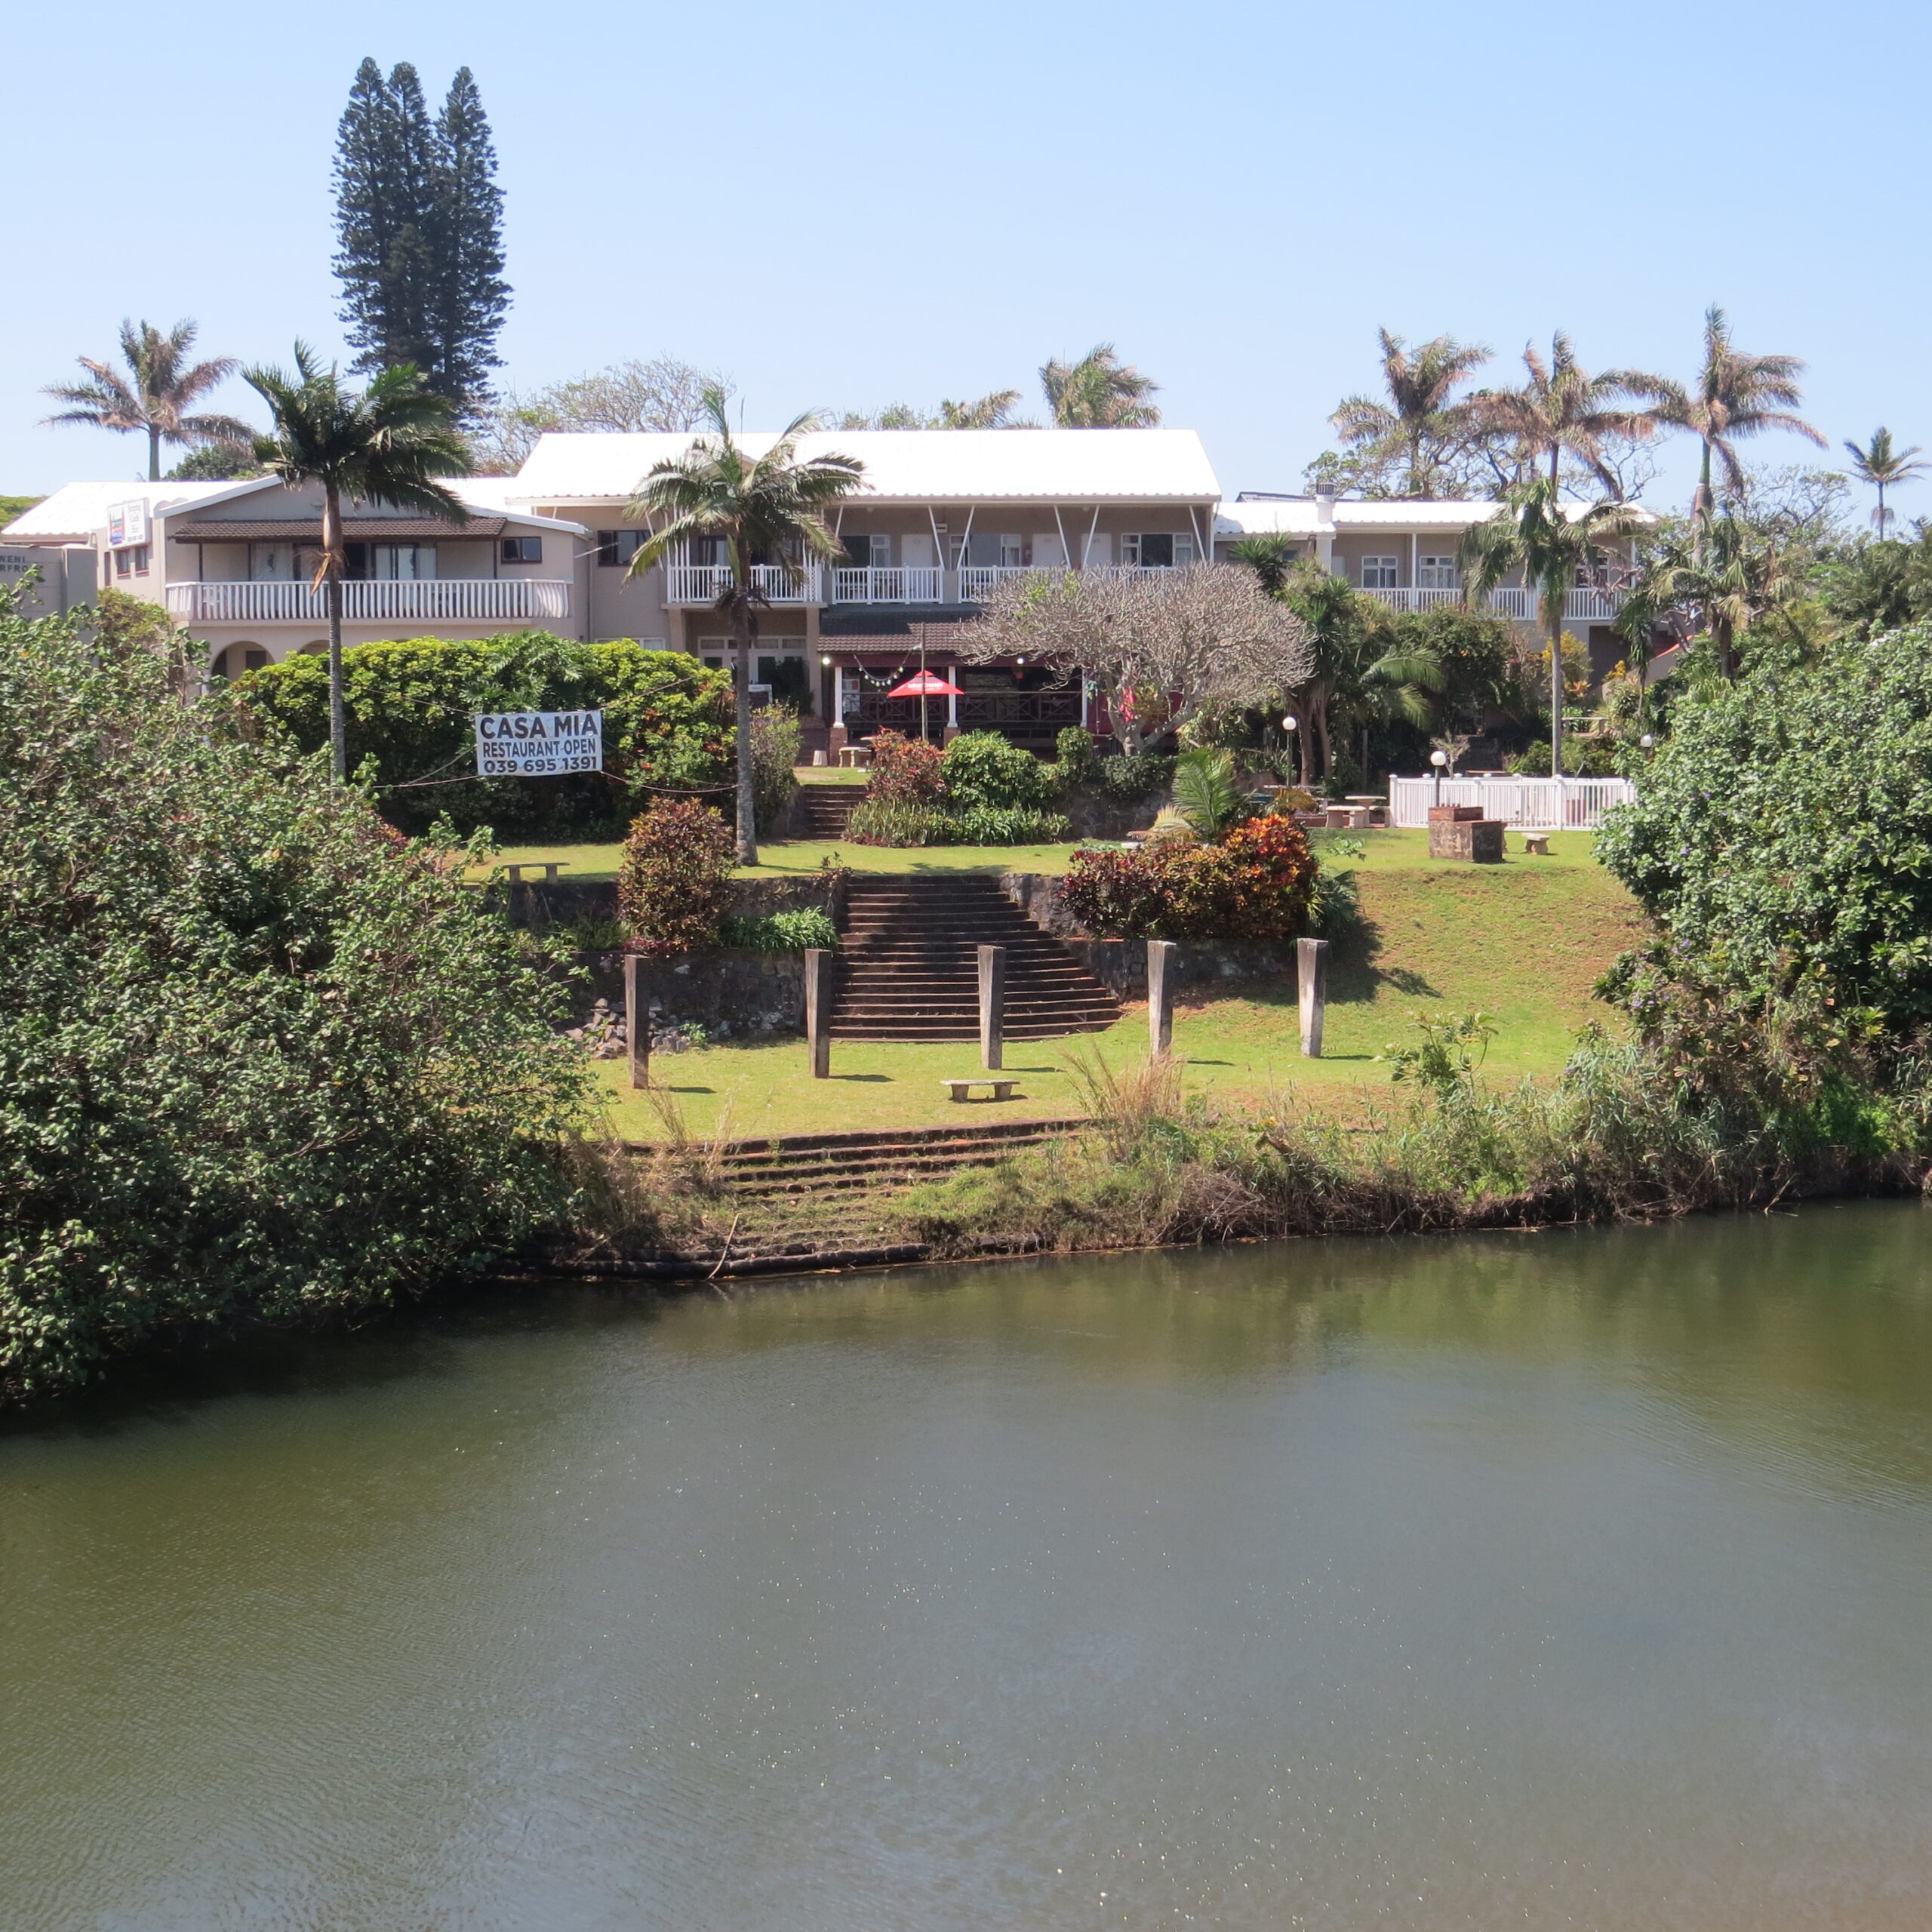 cc The Tweni Waterfront Guest Lodge